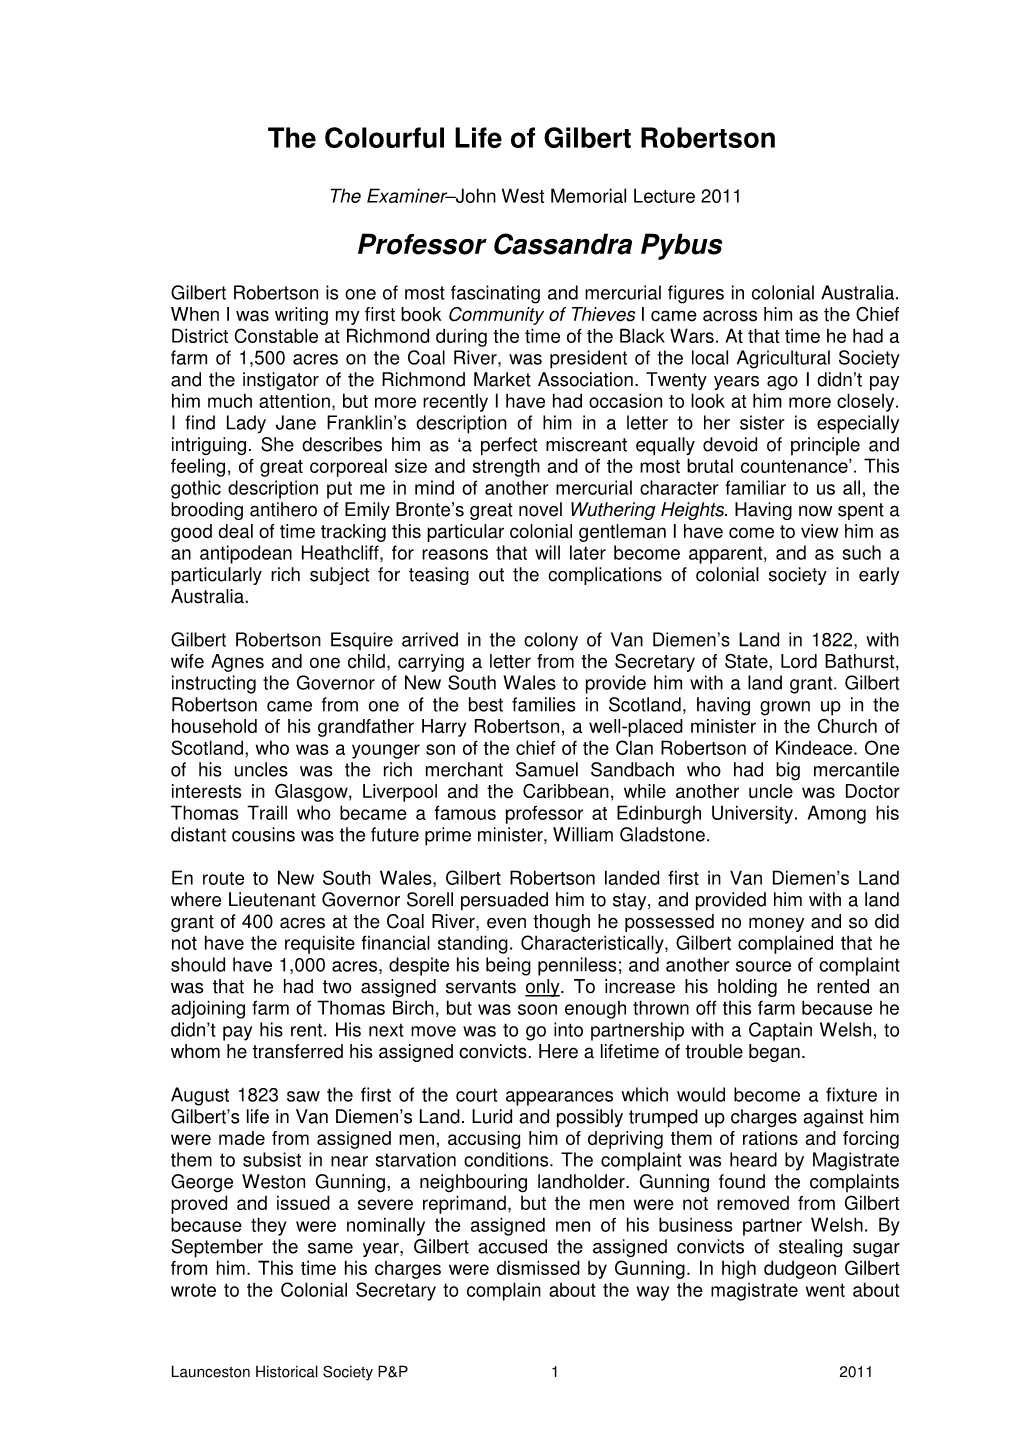 The Colourful Life of Gilbert Robertson Professor Cassandra Pybus